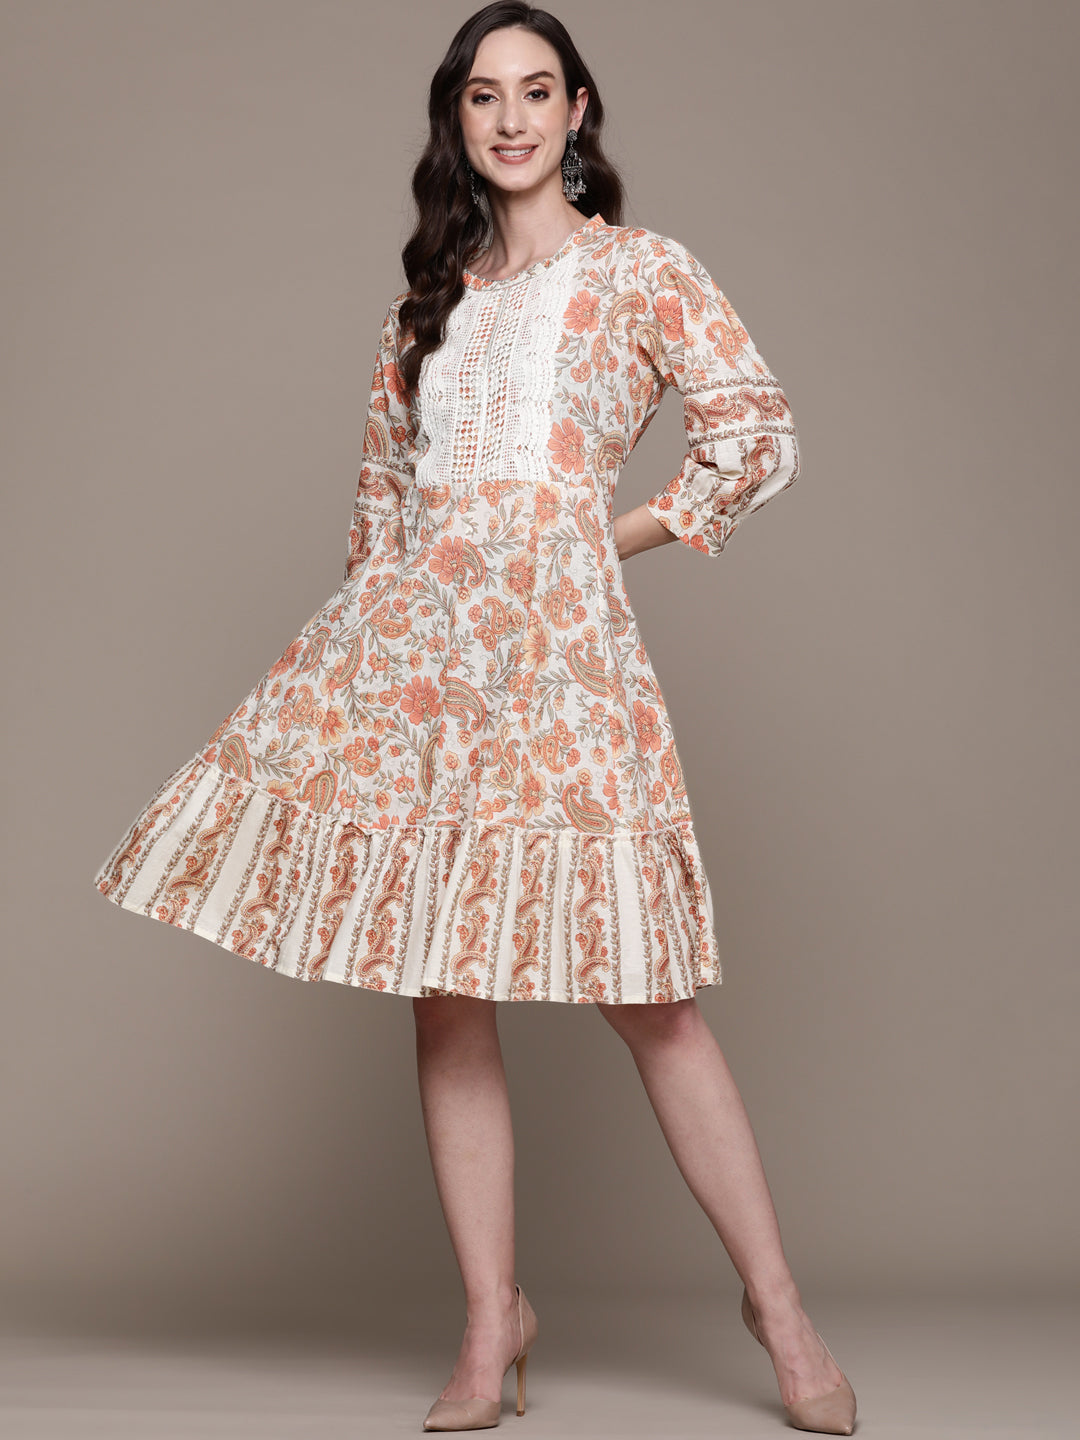 Ishin Women's Cotton Multicolor Embroidered A-Line Dress